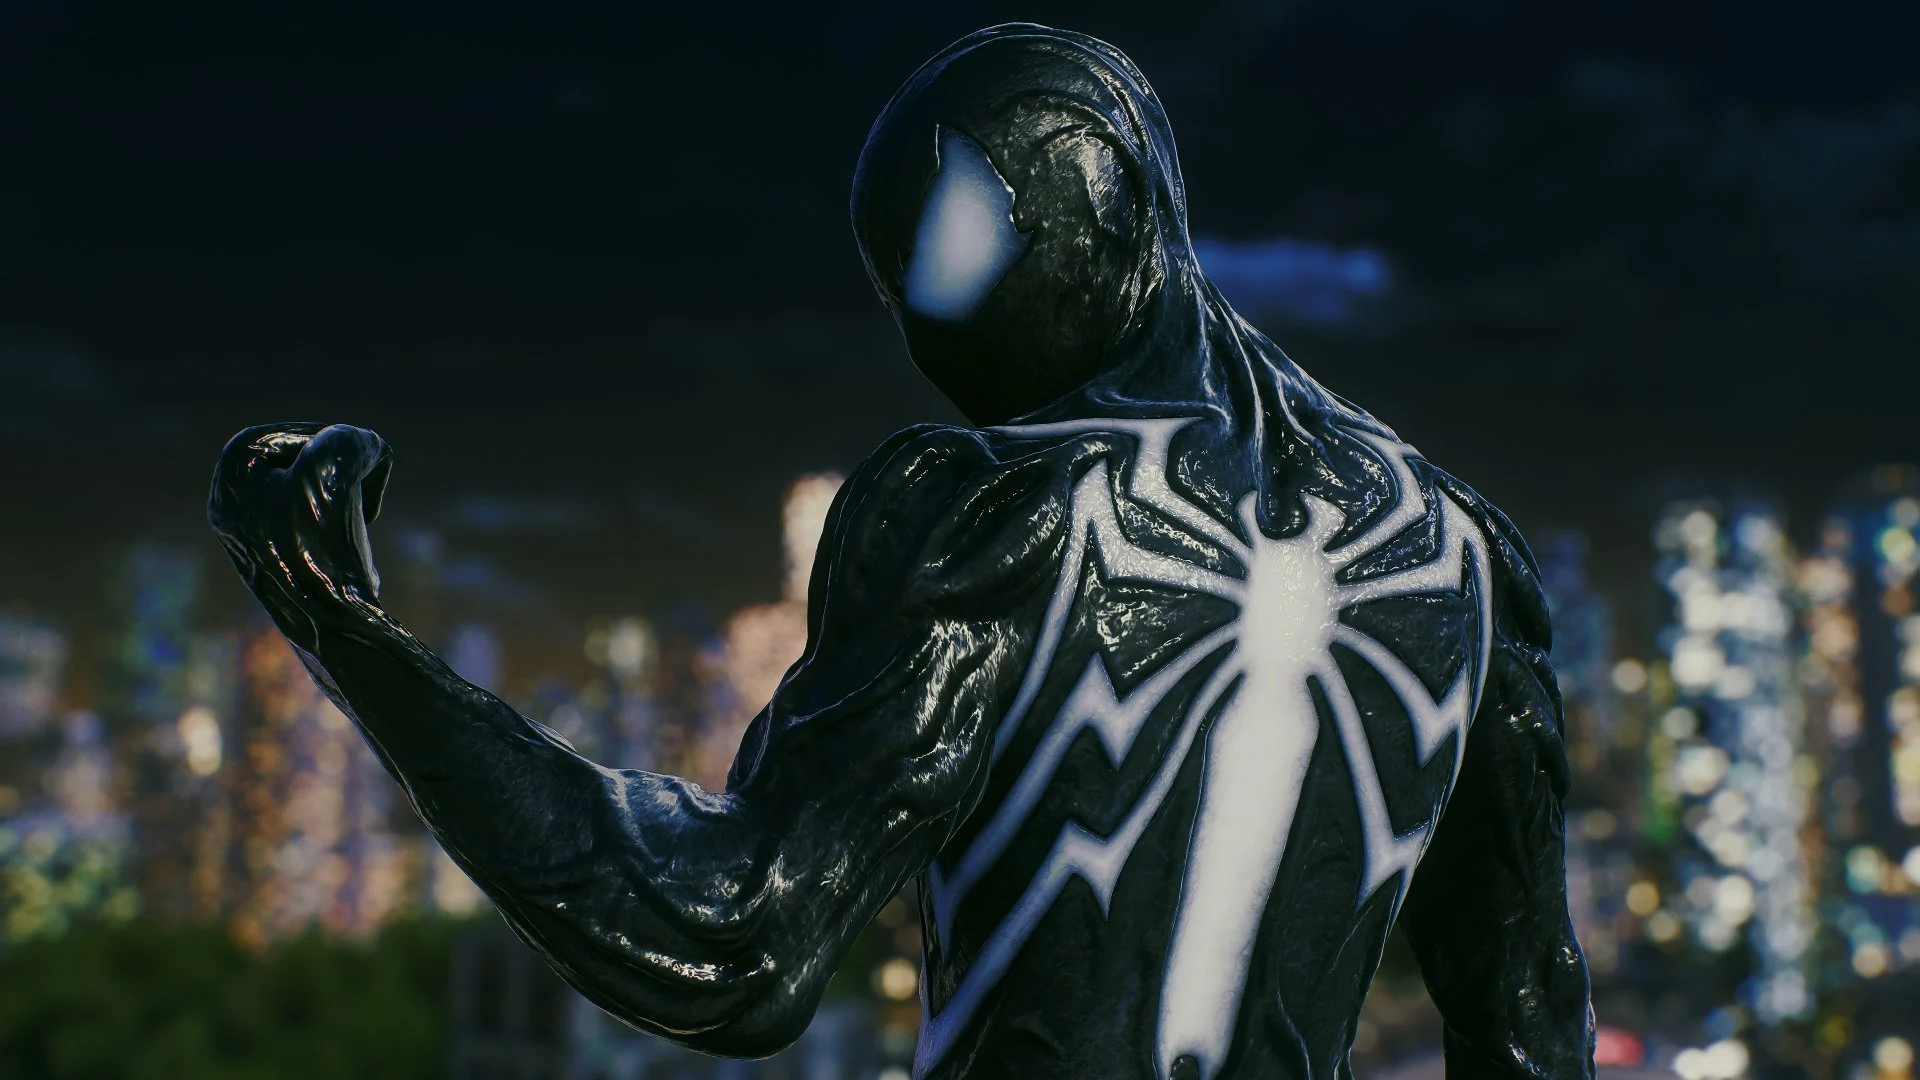 Peter Parker in Black Symbiote suit in Spider-Man 2